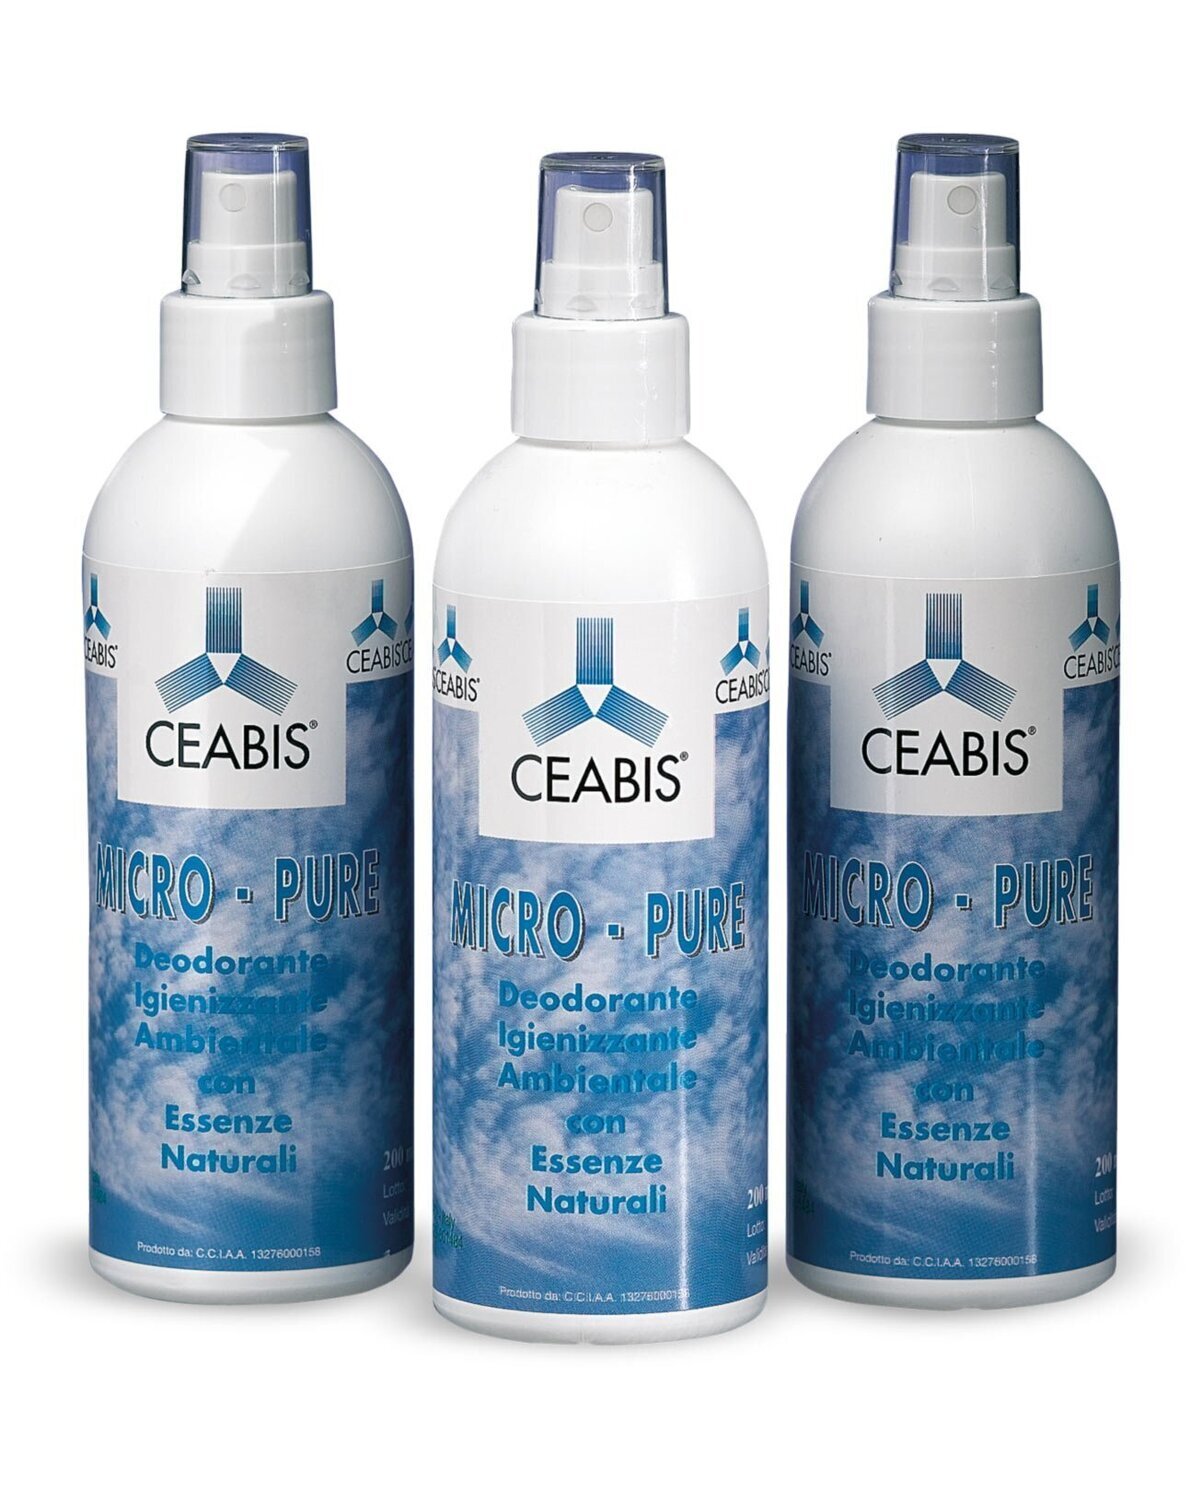 Micro-Pure environmental cleansing spray